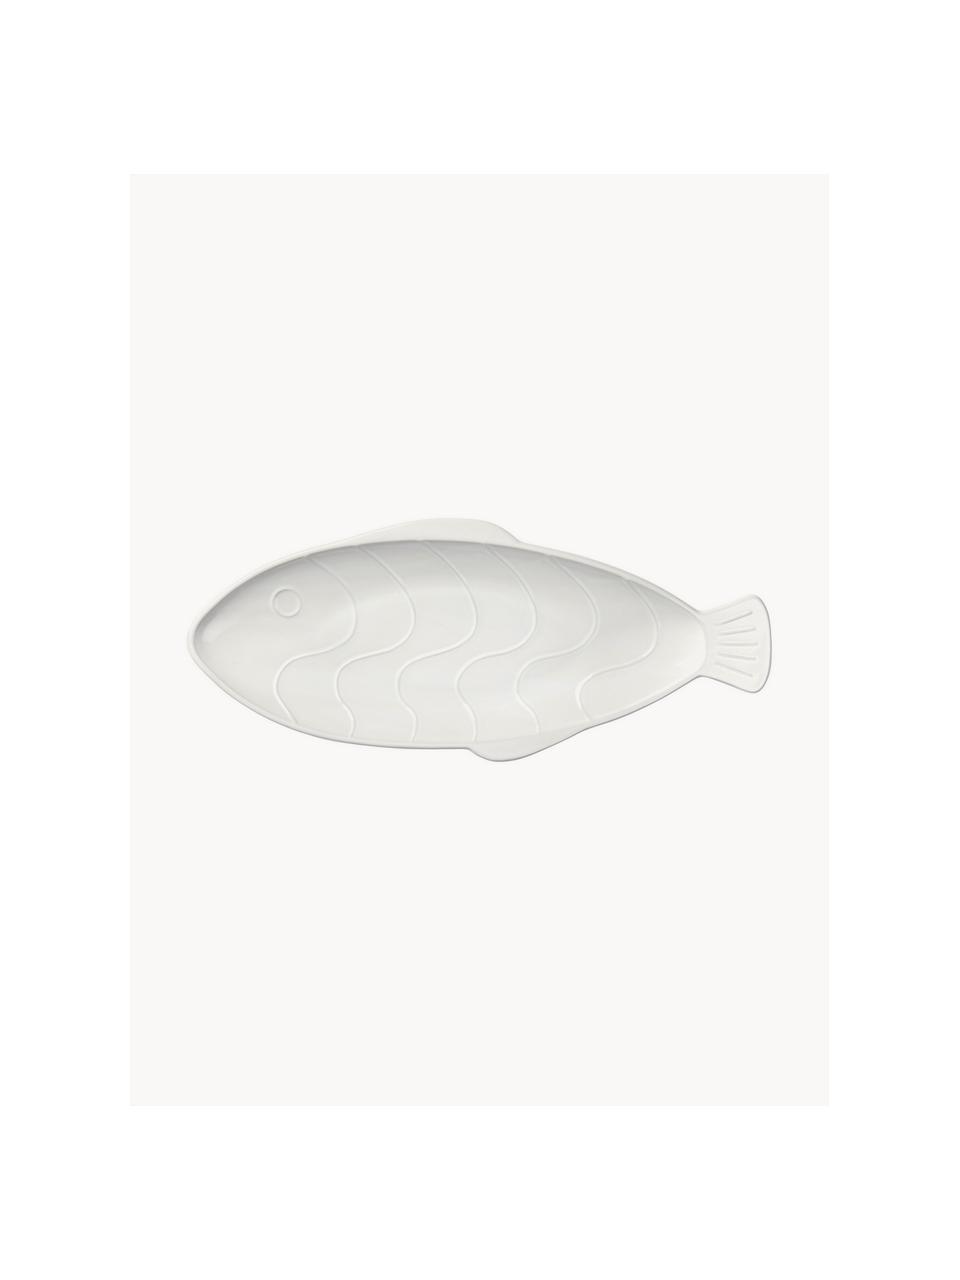 Plat de service Pesce, Grès cérame, Blanc, larg. 41 x long. 18 cm